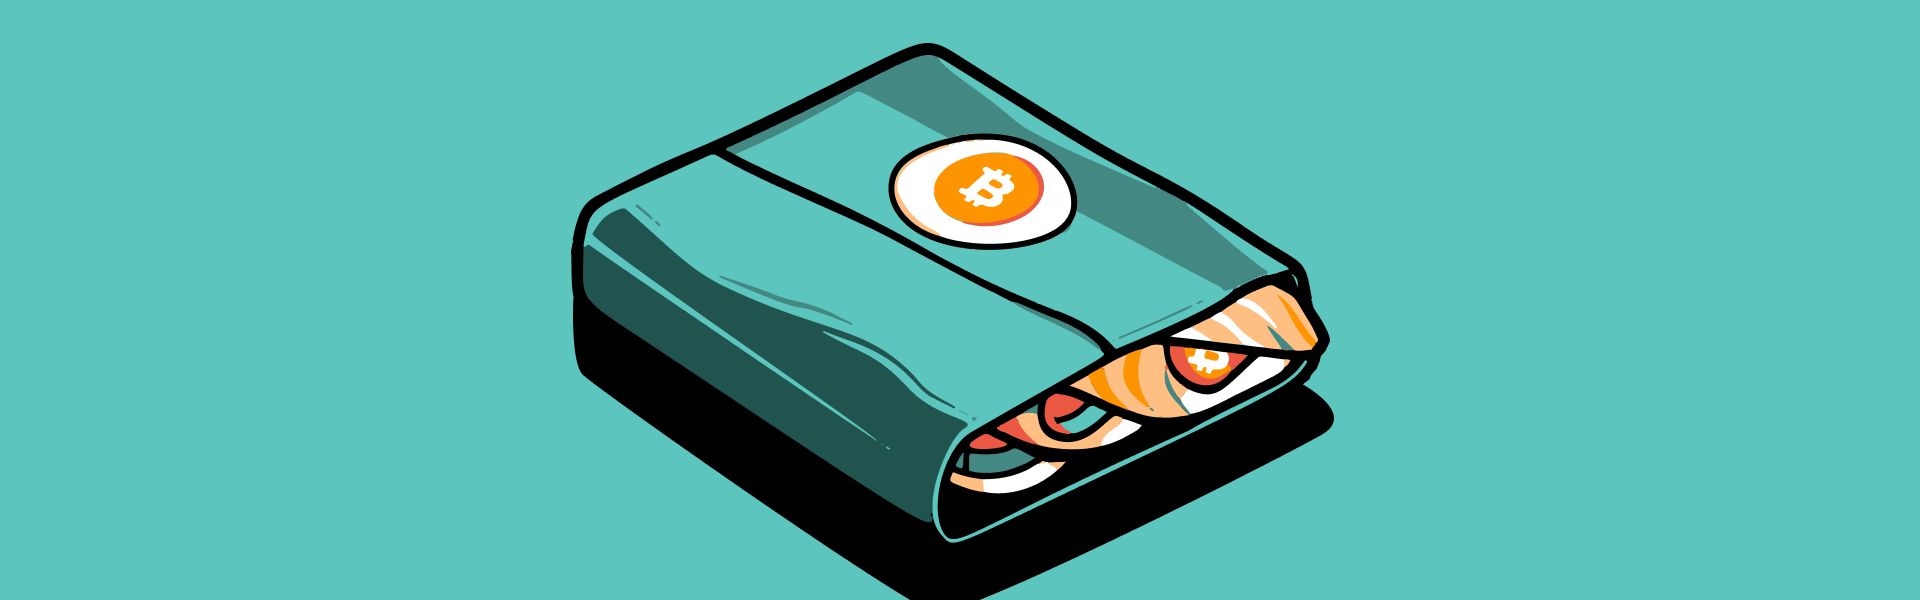 Wasabi Wallet – перший анонімний гаманець із функцією CoinJoin